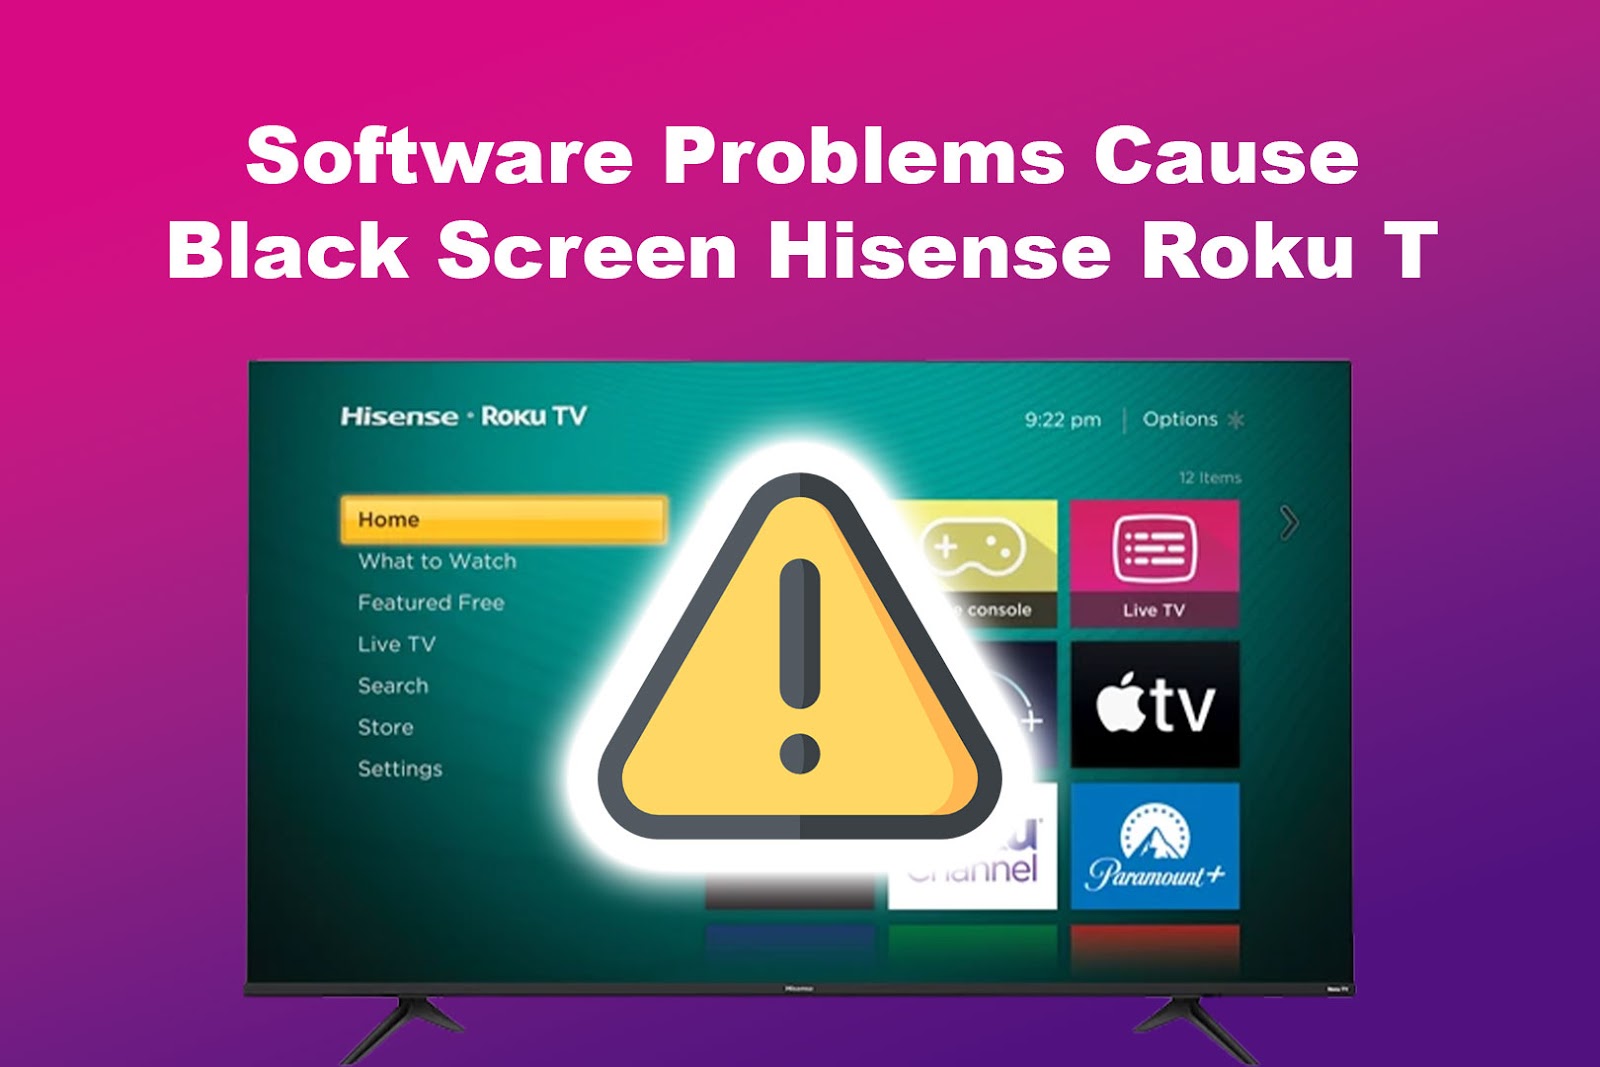 Software Problems Cause Black Screen Hisense Roku TV